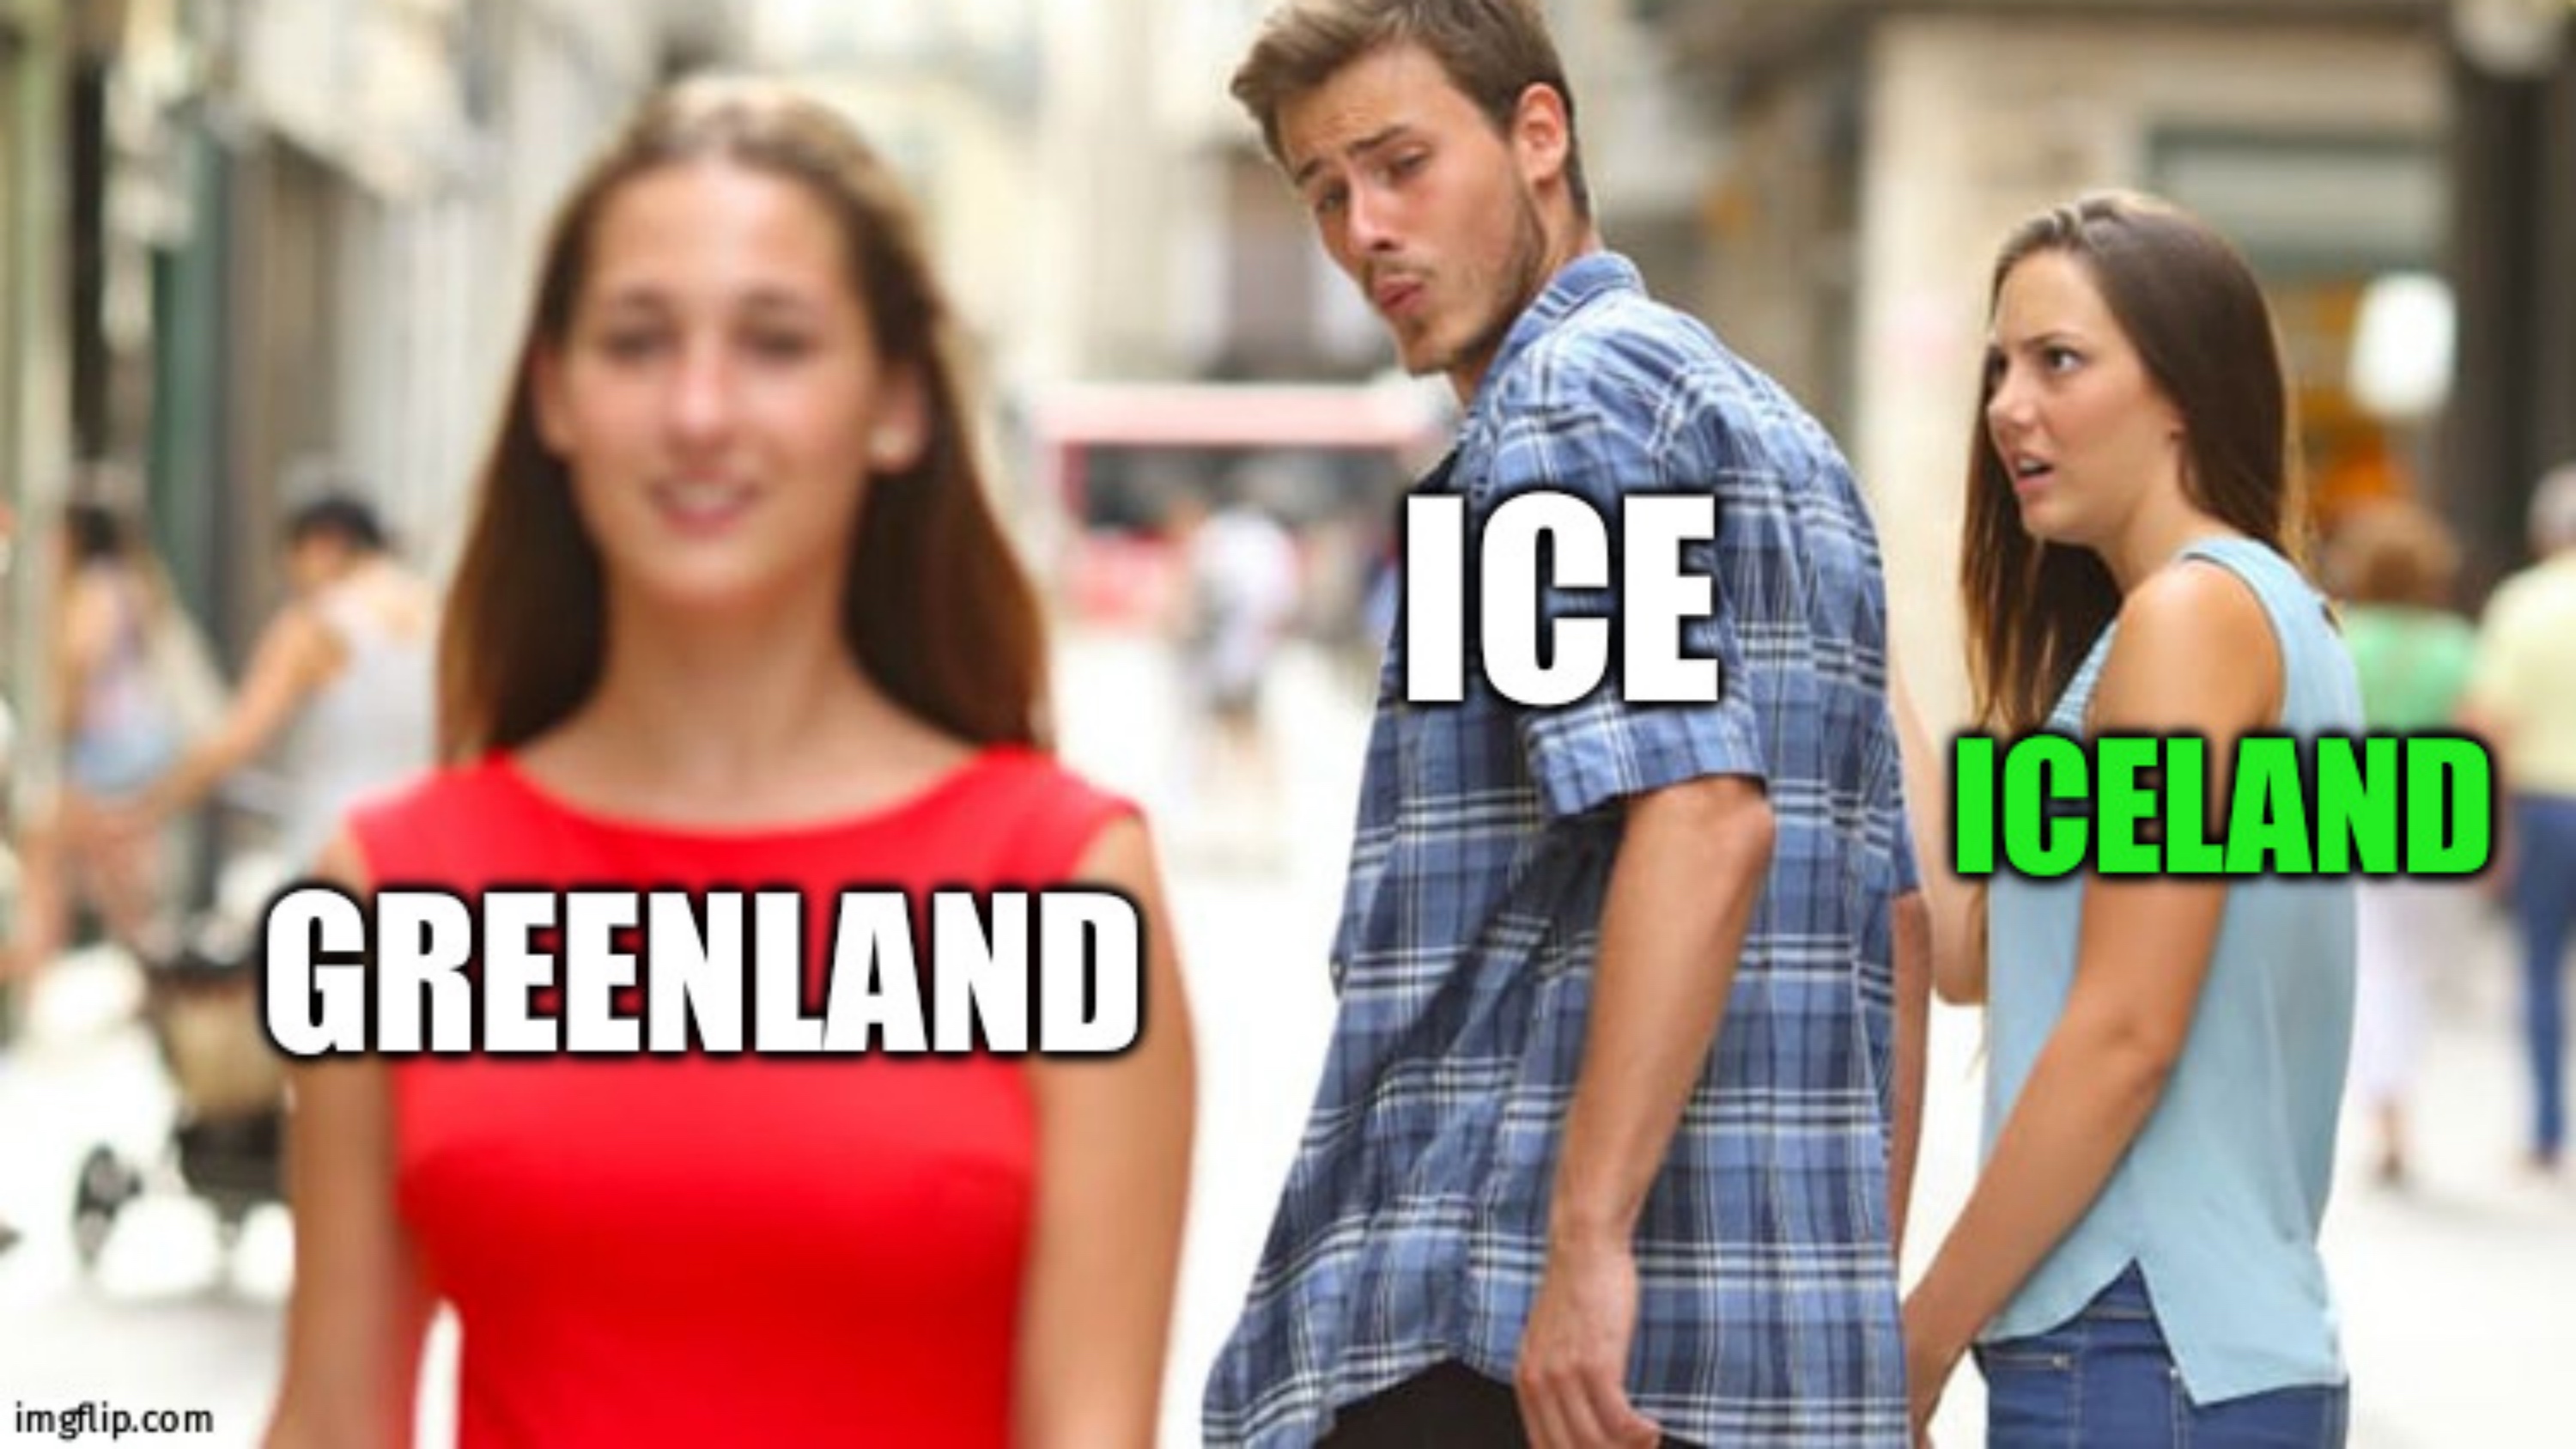 Funny Iceland vs Greenland meme